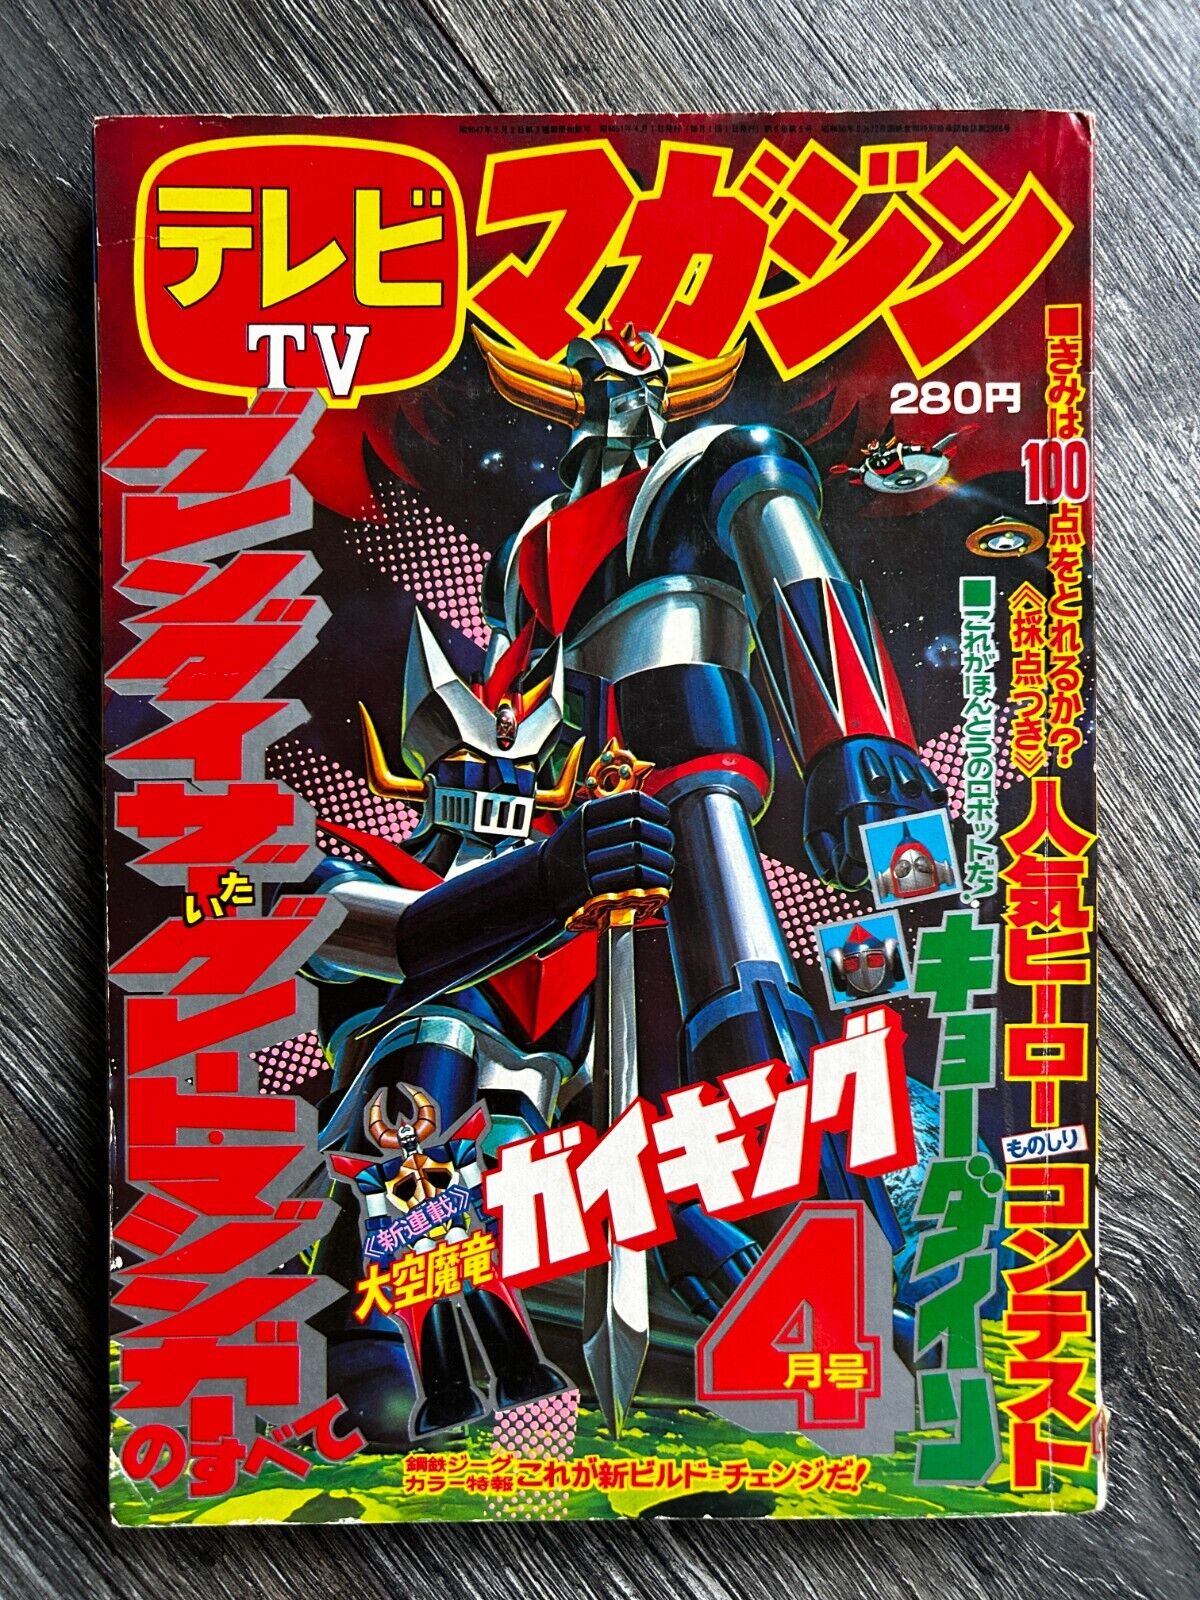 MAZINGER Z GRENDIZER TV Magazine Apr 1976 Inserts Manga Anime Tokusatsu Kodansha